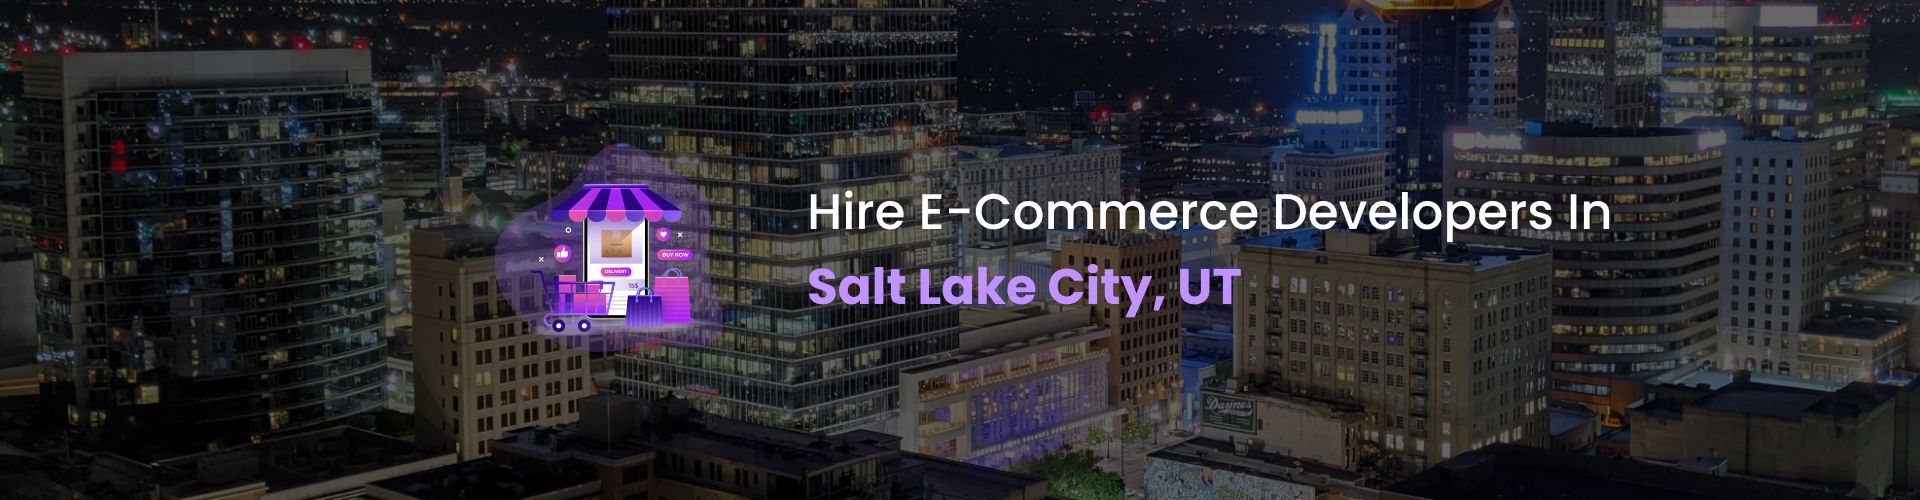 ecommerce development company in salt lake city